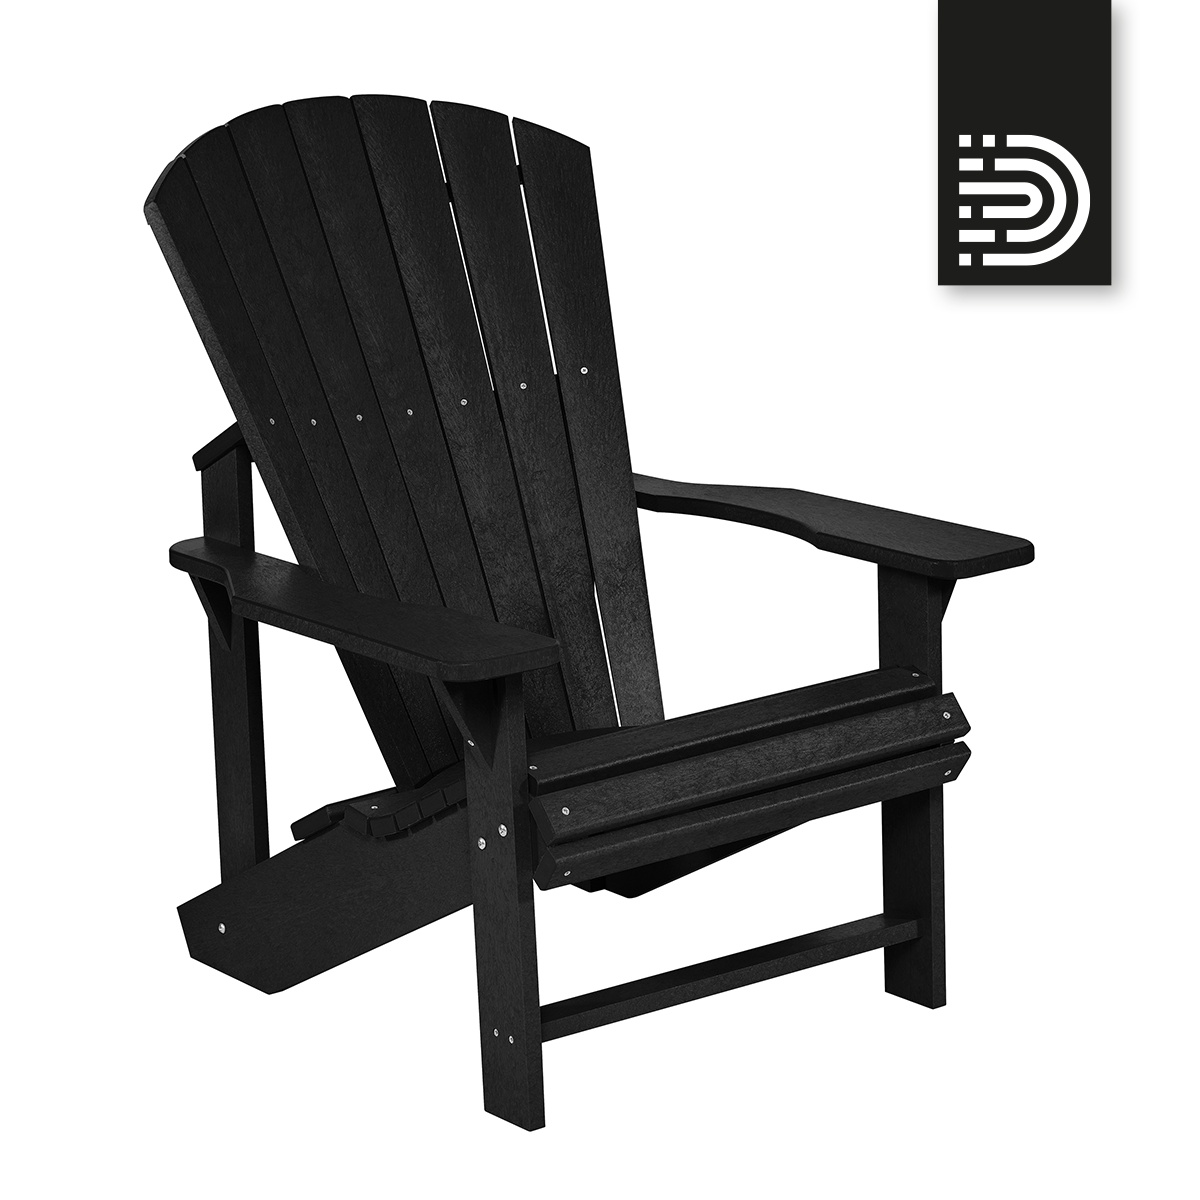  C01 Classic Adirondack Chair - black 14